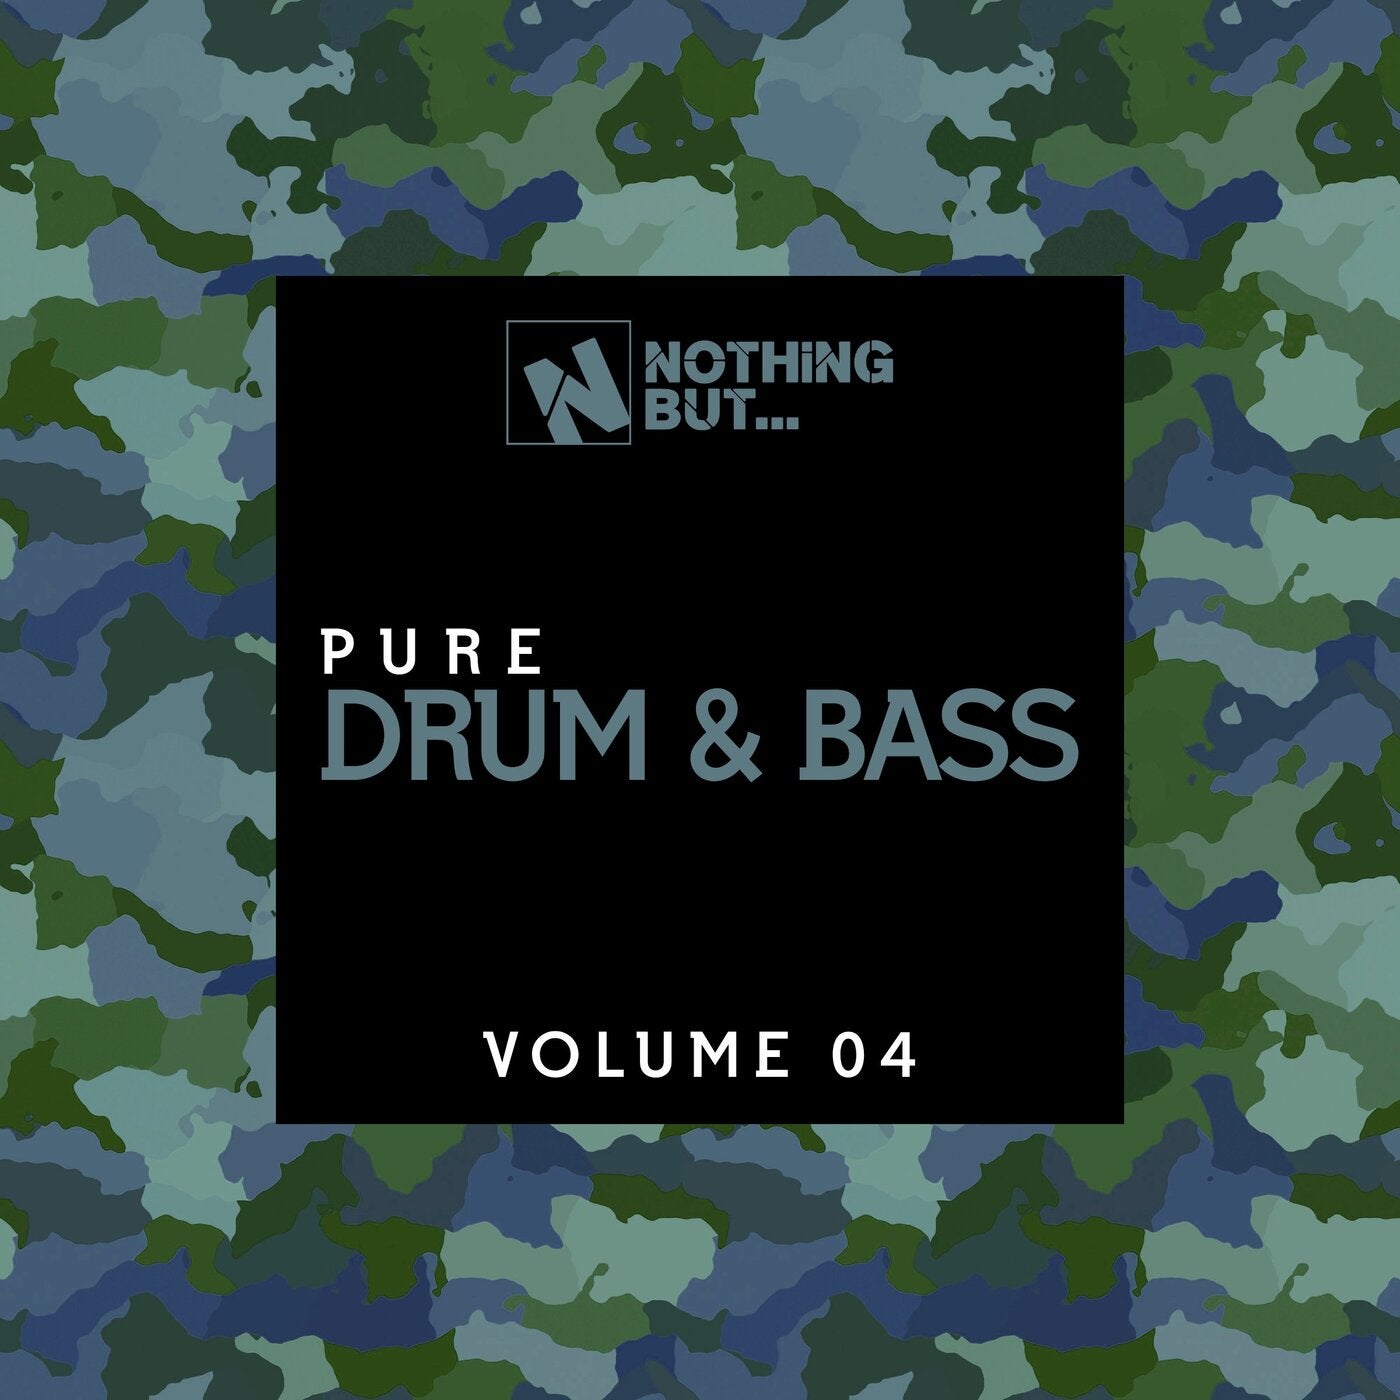 VA - Nothing But... Pure Drum & Bass, Vol. 04 [NBPDNB04]